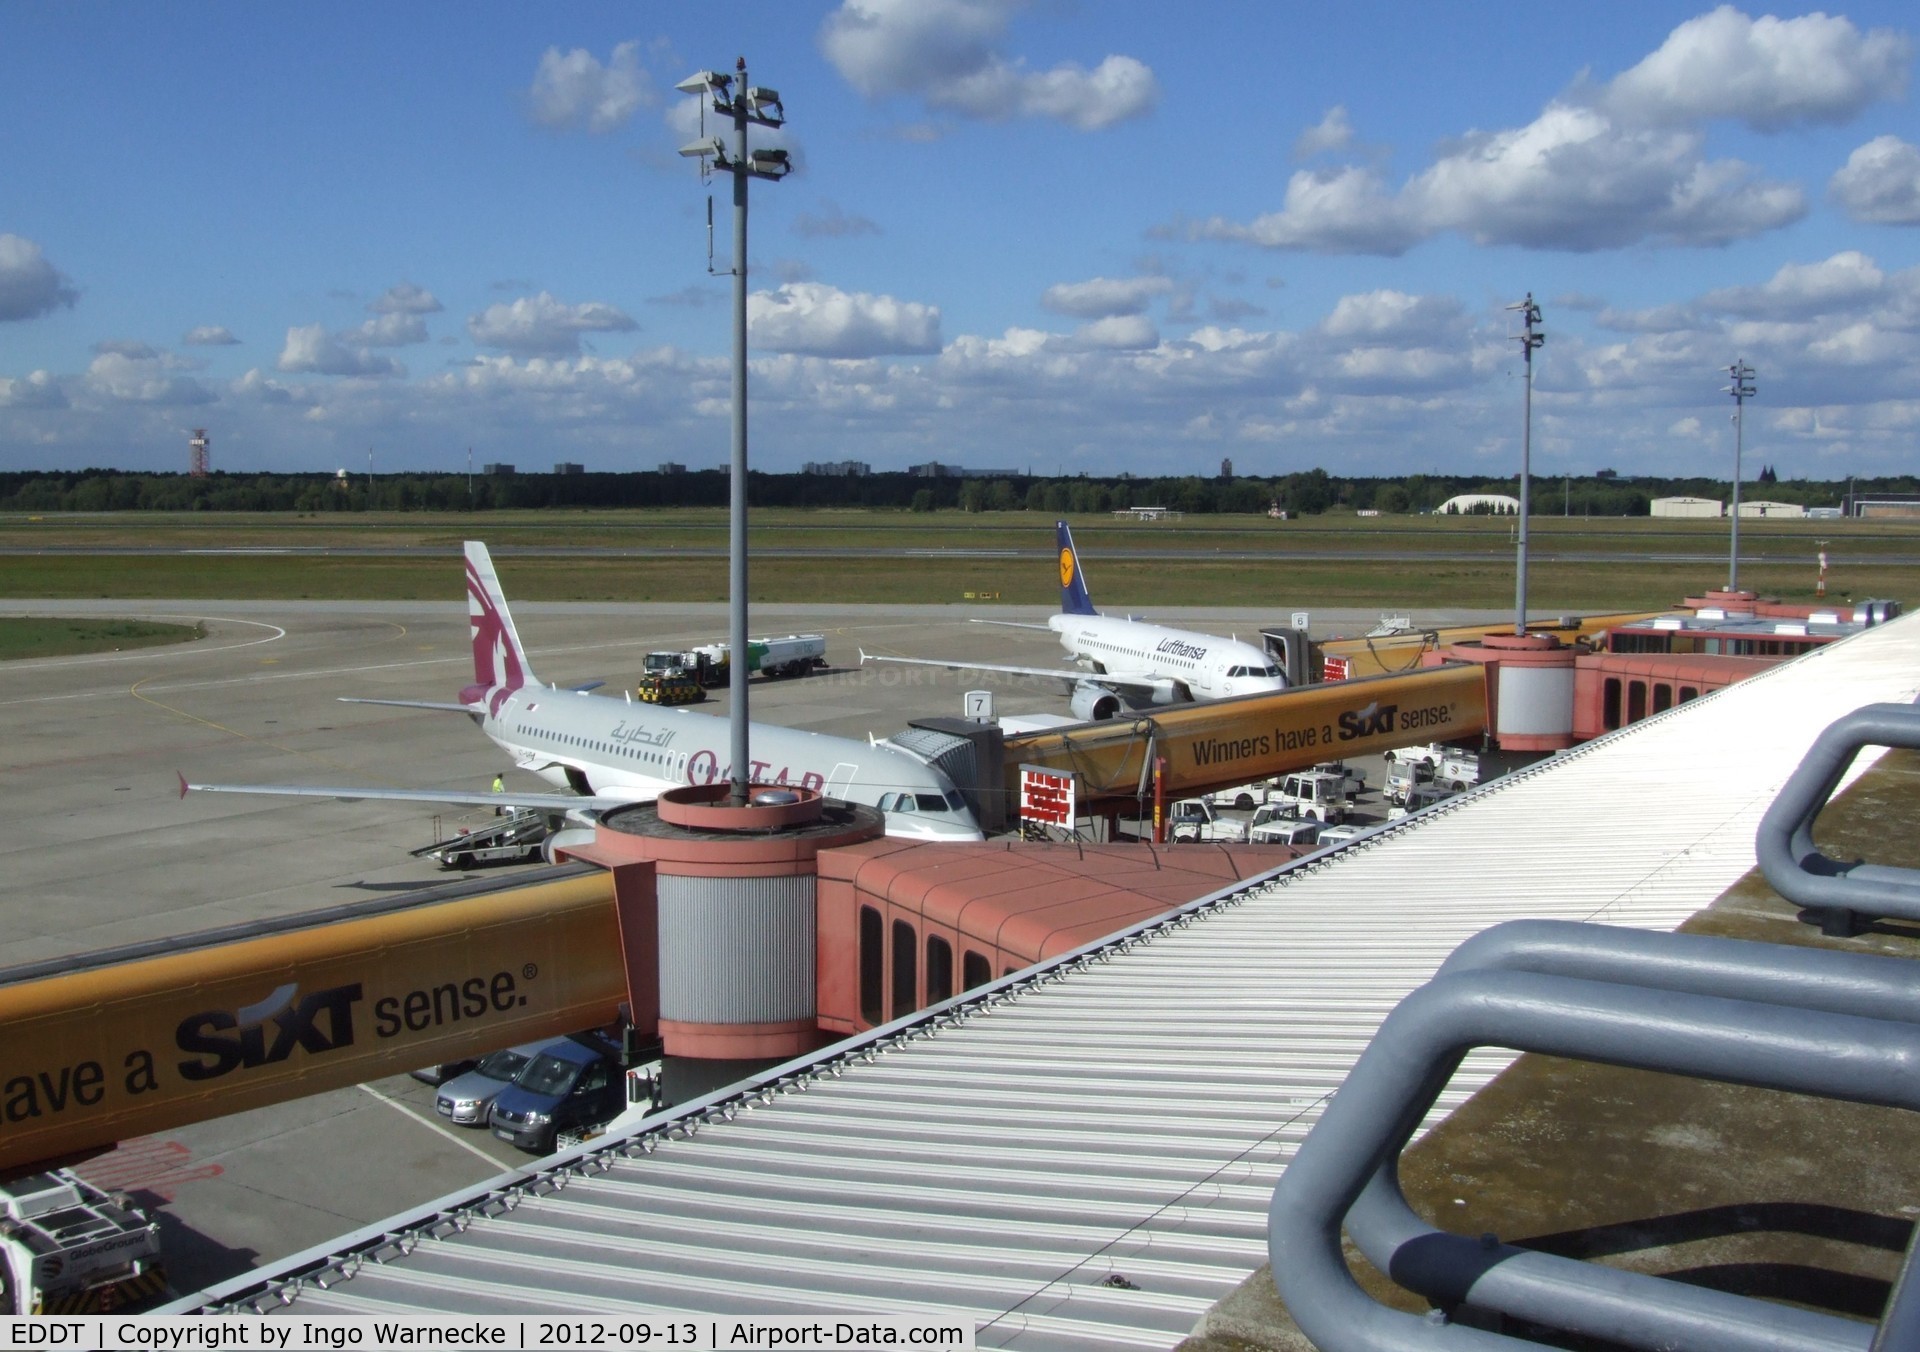 Tegel International Airport (closing in 2011), Berlin Germany (EDDT) - terminal and boarding bridges at Berlin-Tegel airport